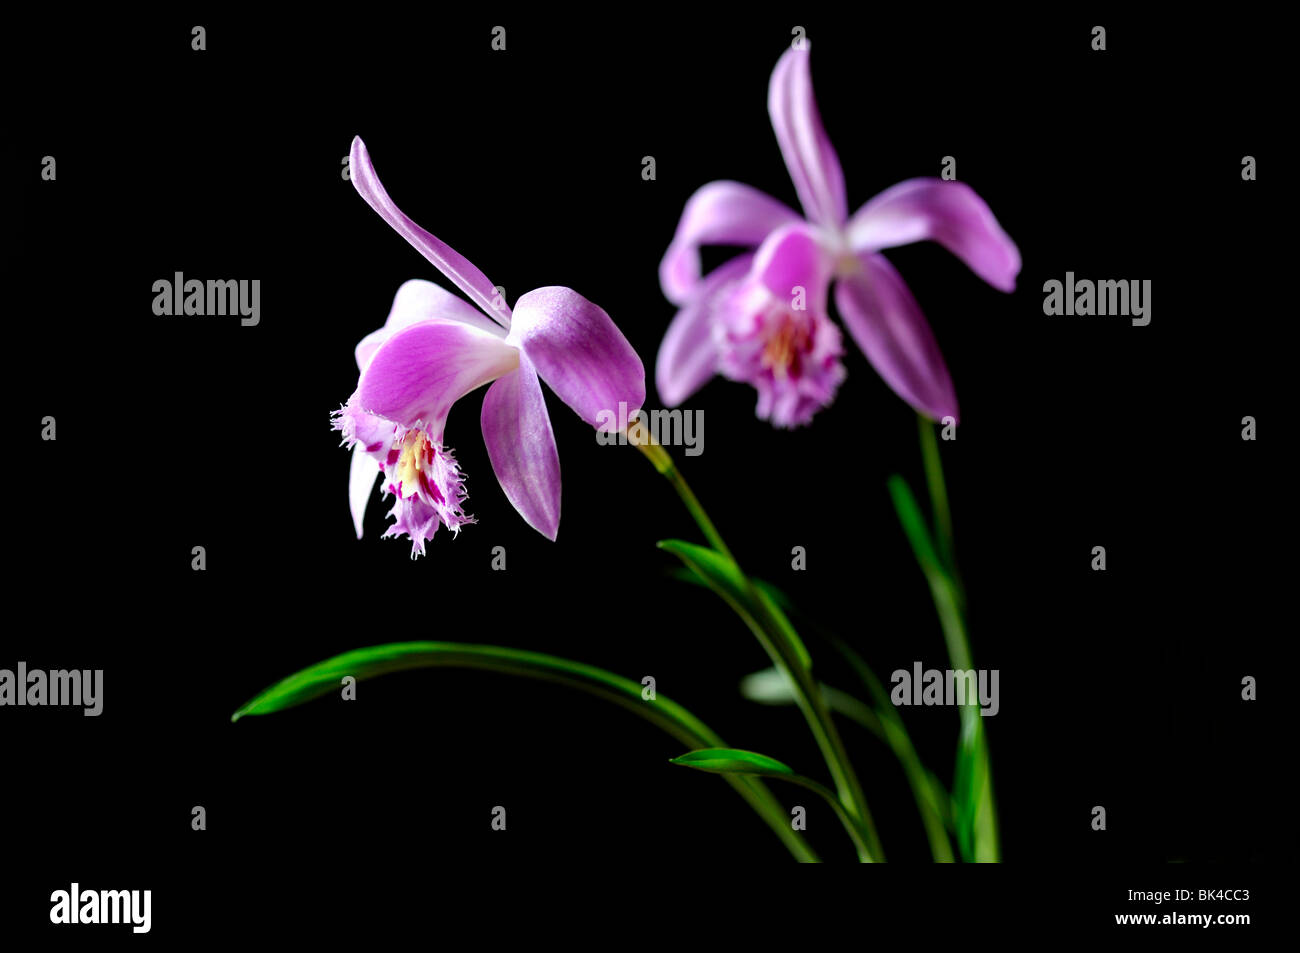 Pleione piton hybrid windowsill orchid flower plant pink purple white set contrast contrasted black dark background Stock Photo